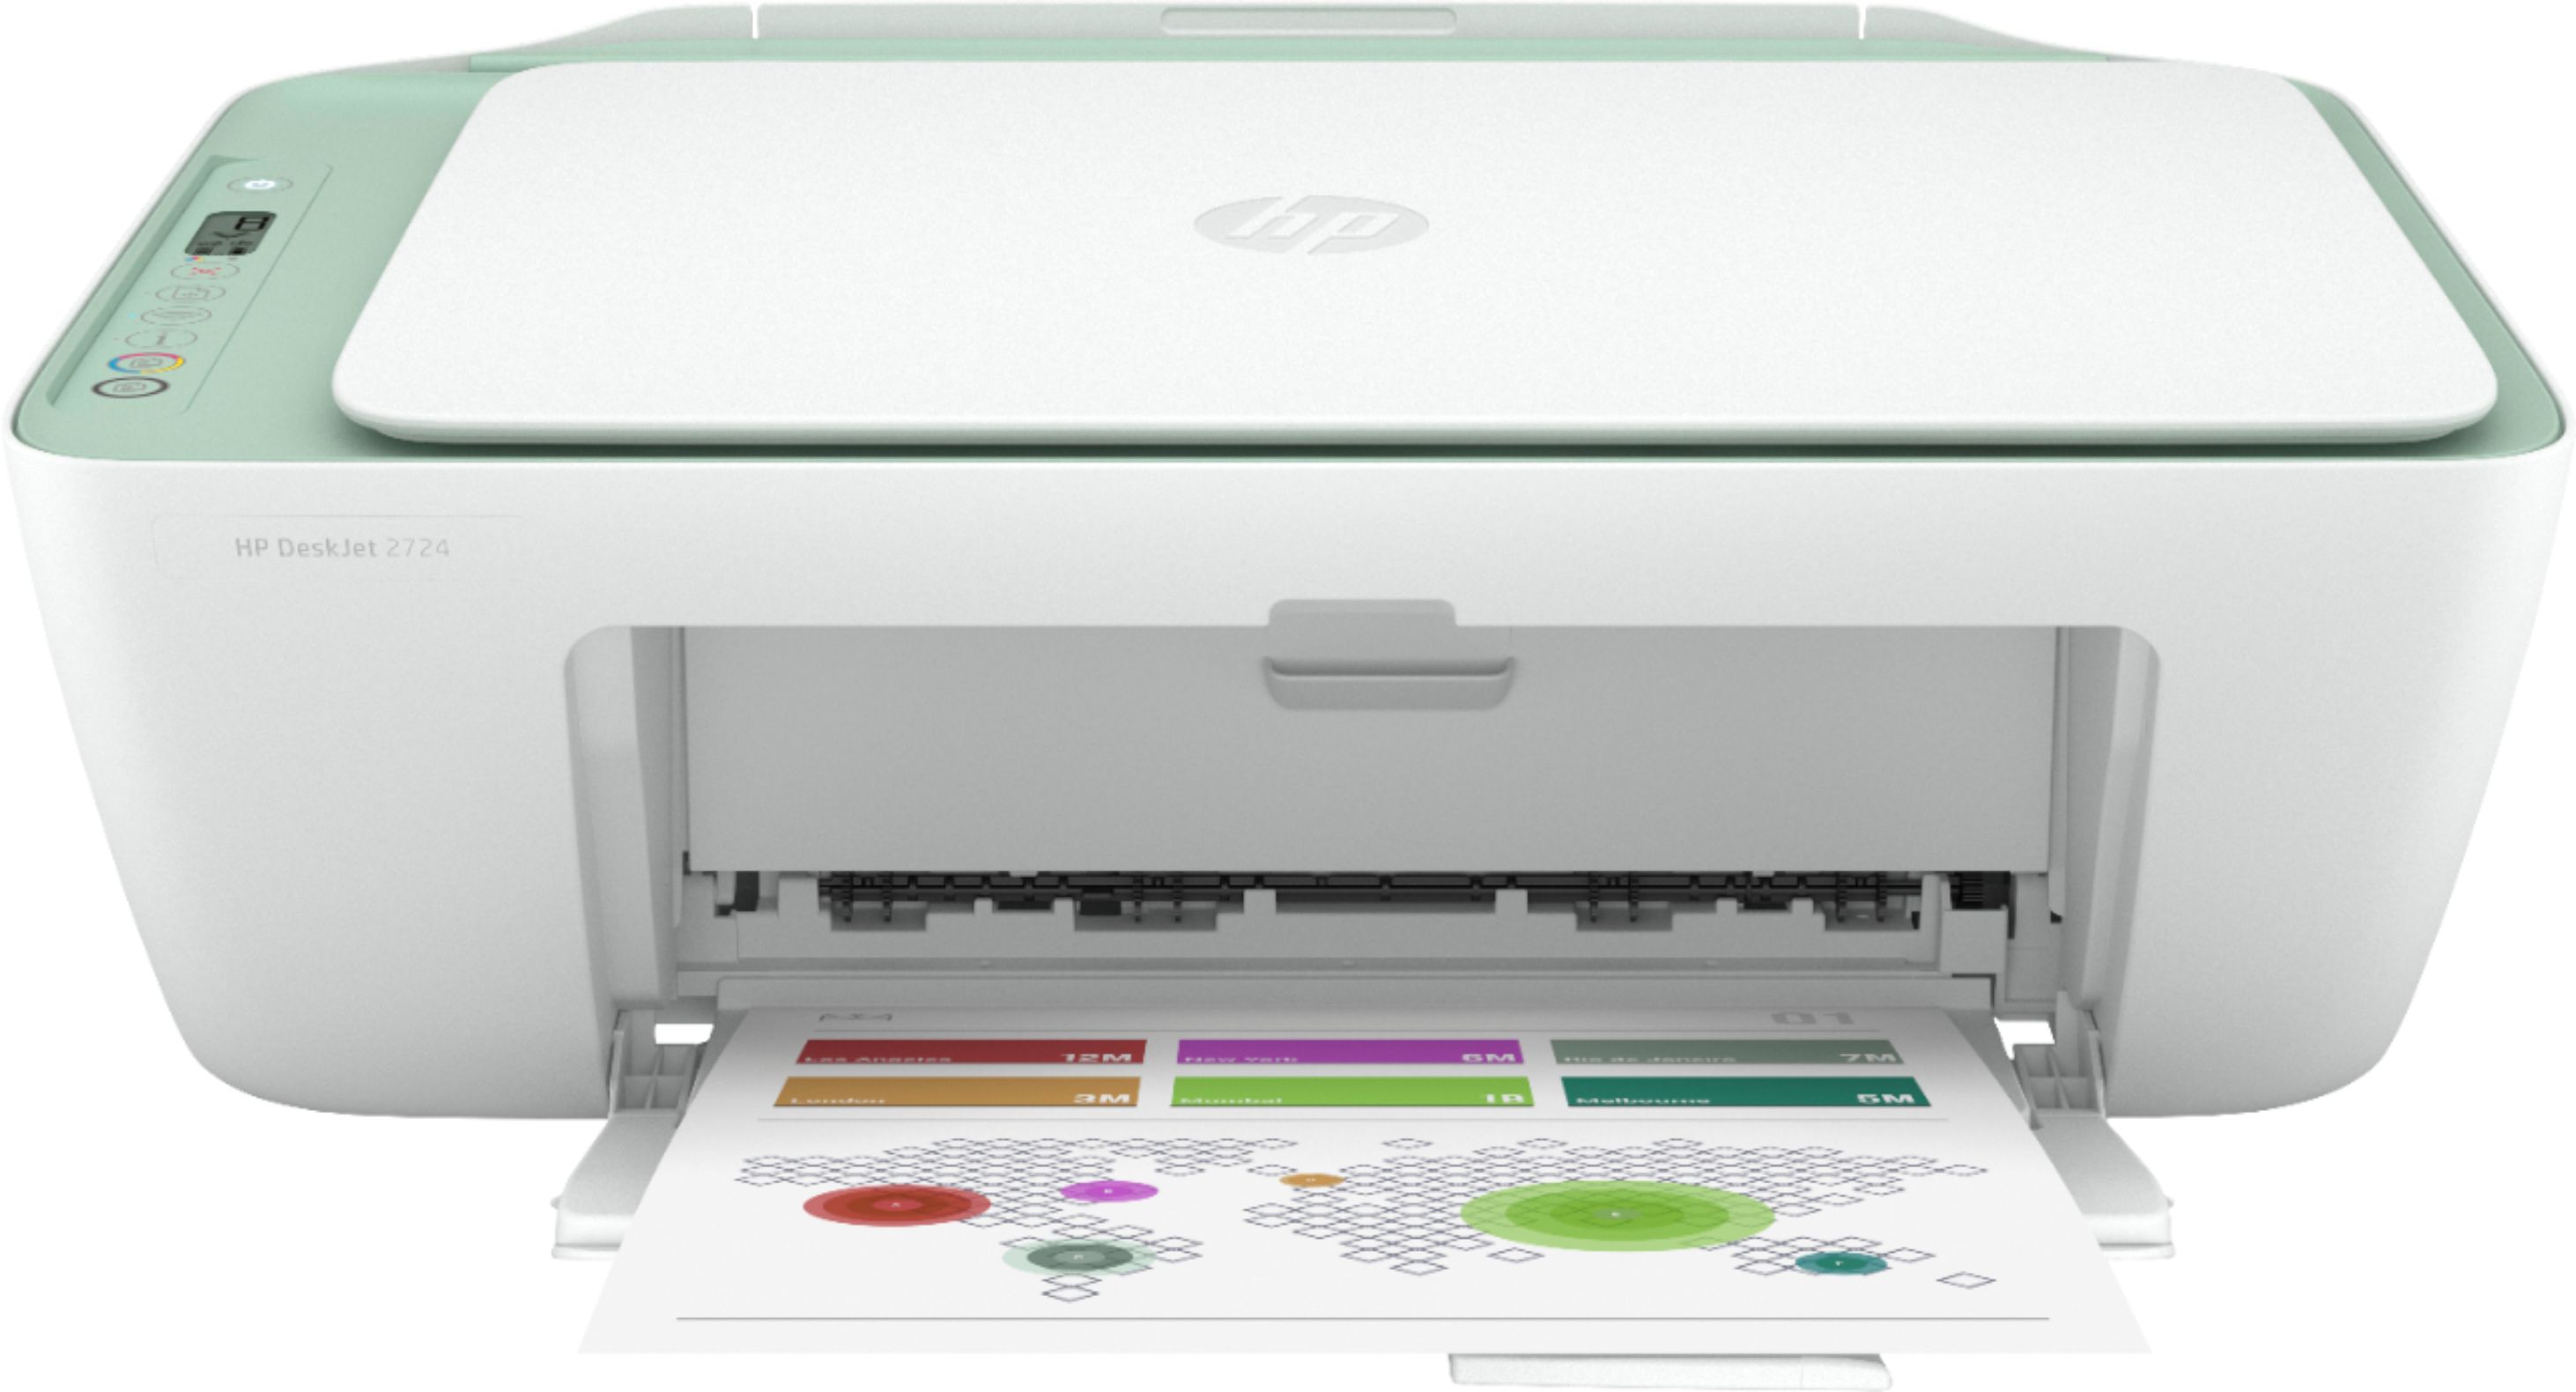 HP DeskJet 2724 Wireless All-In-One Instant Ink Inkjet Printer White & DeskJet 2724 - Buy